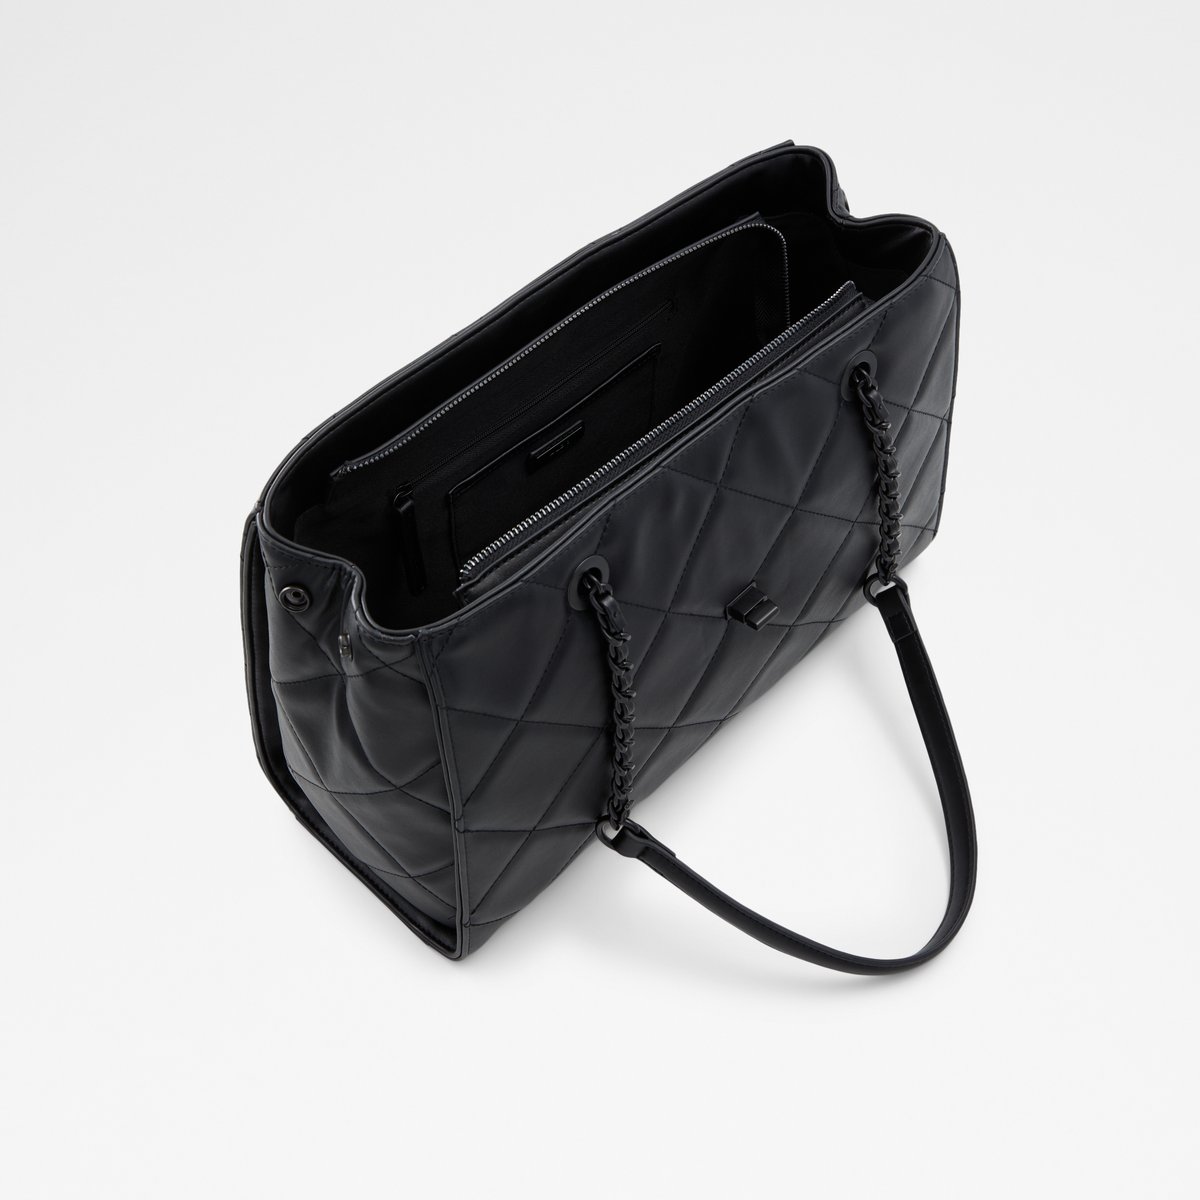 One Size ALDO Women's Alaevenn Tote Bag Black/Black